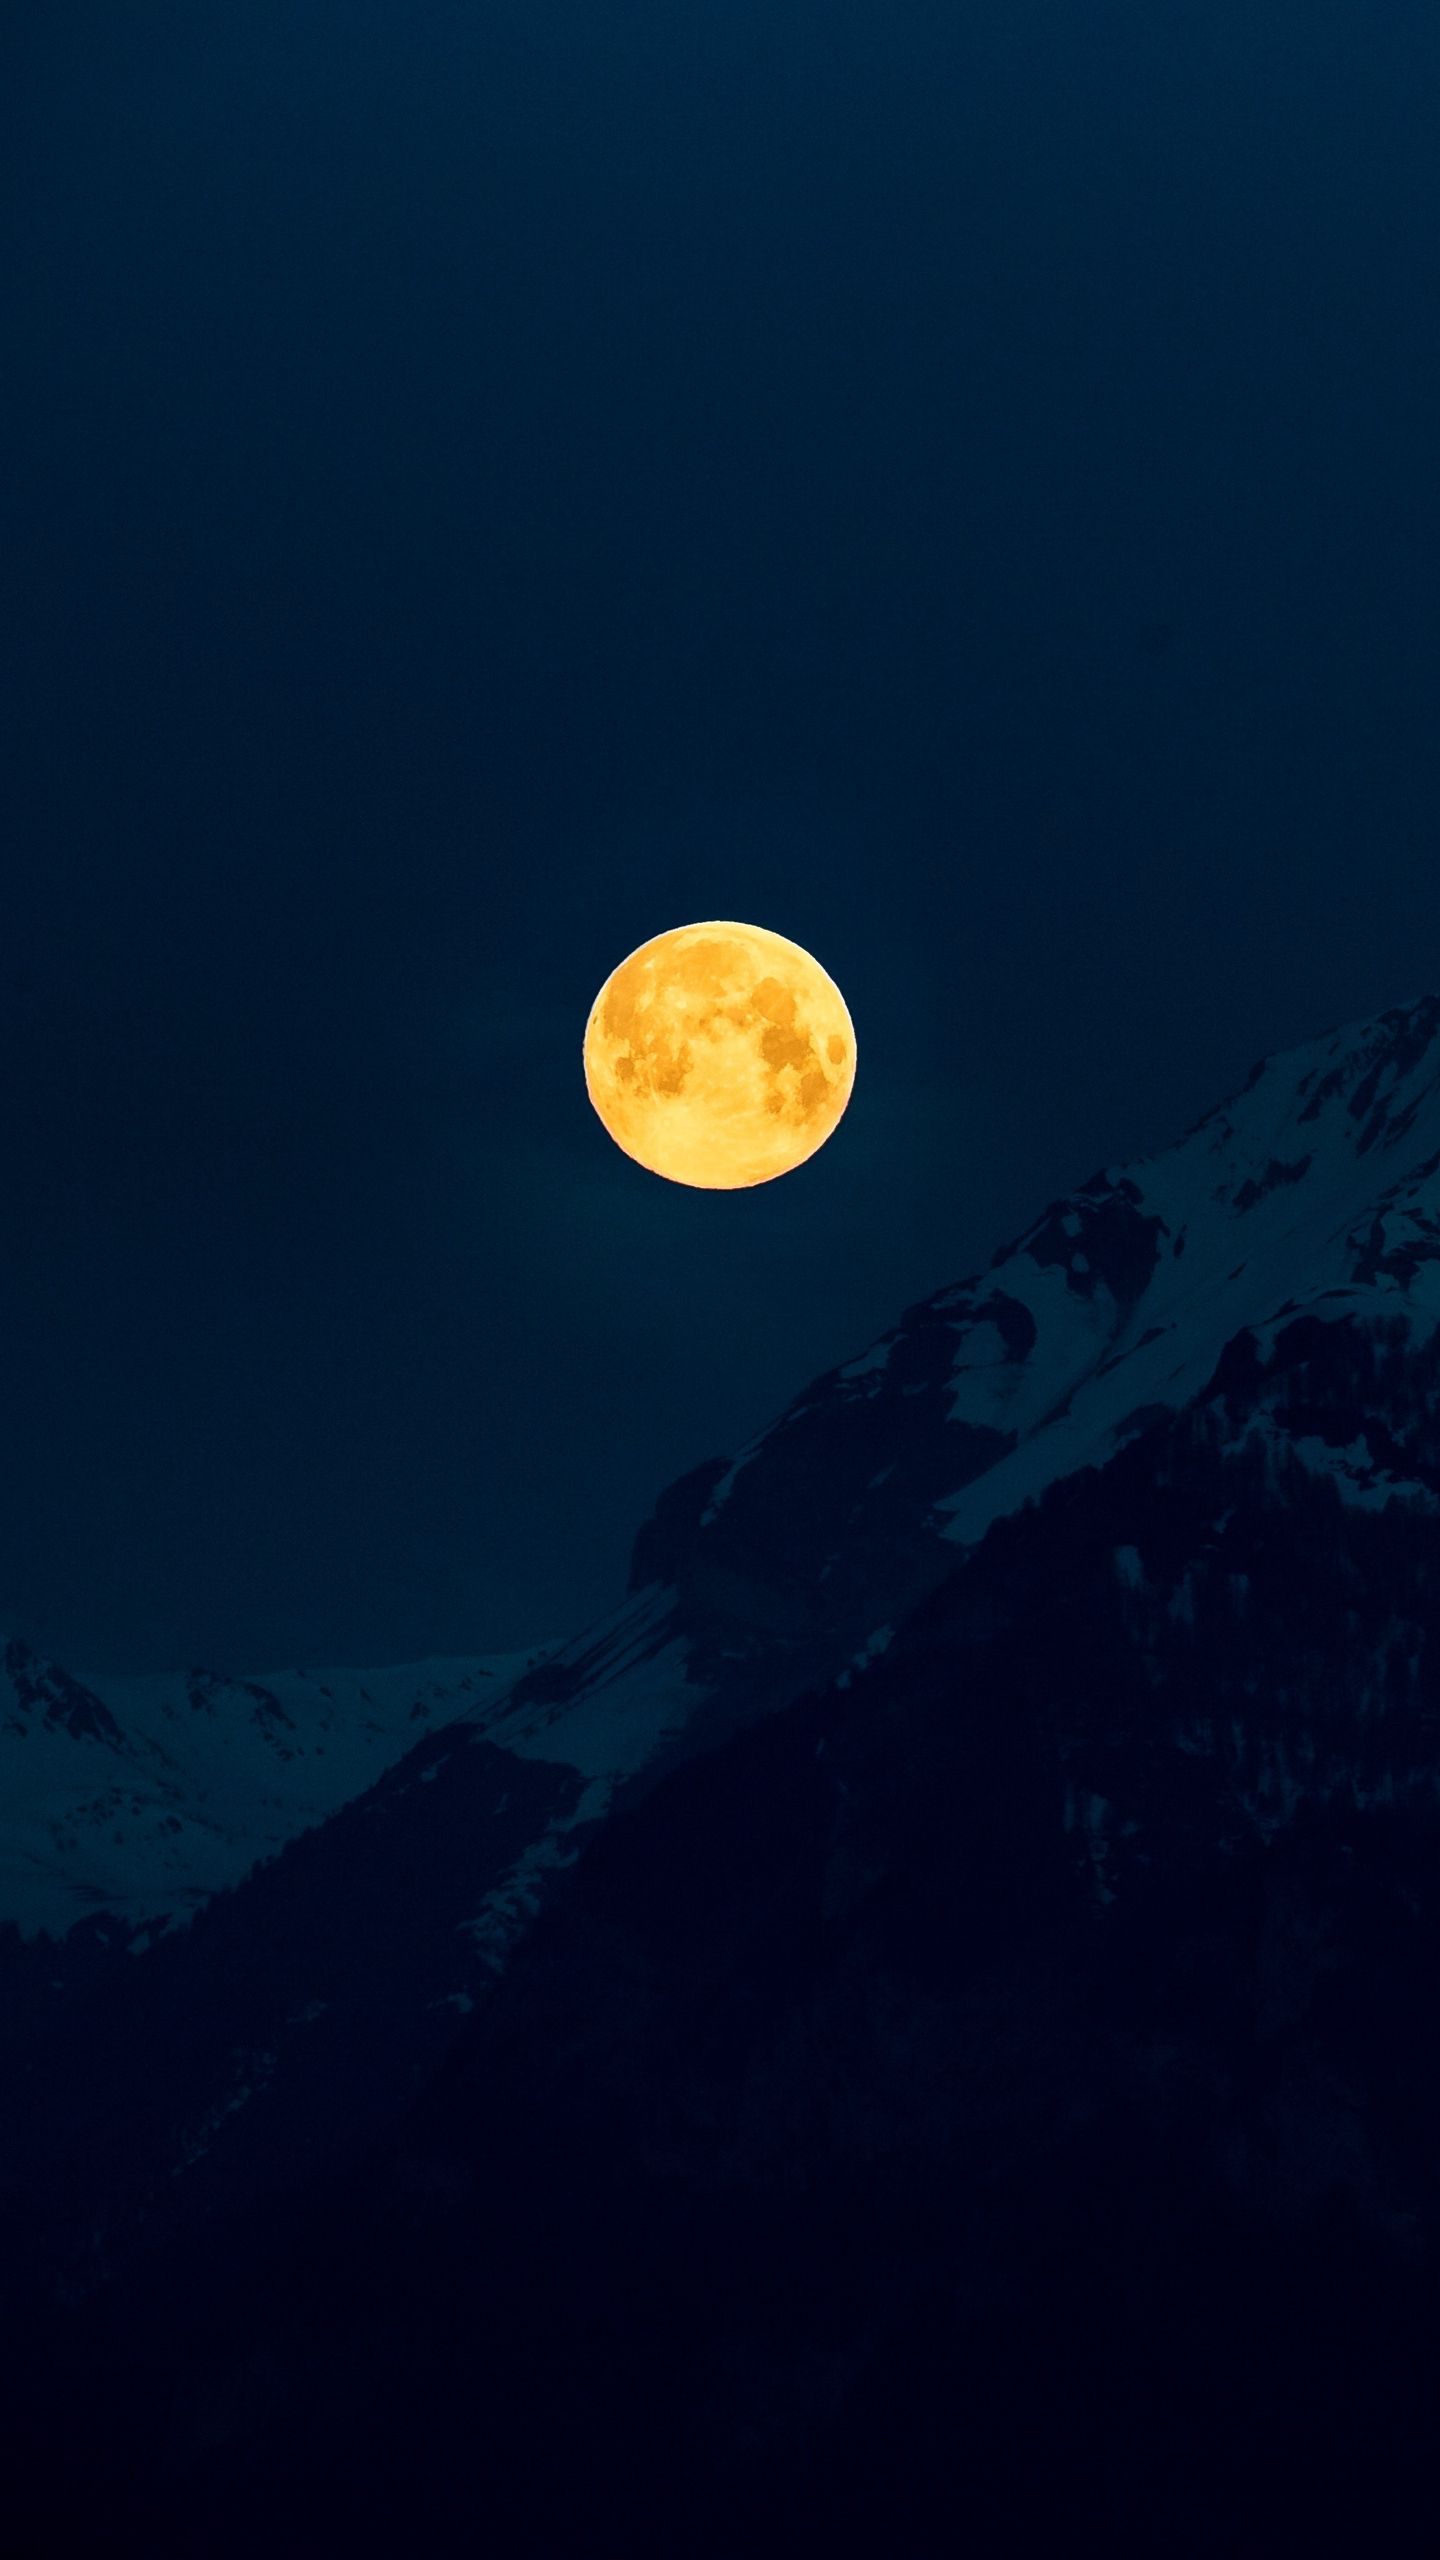 Download wallpaper 1440x2560 moon, mountains, night, full moon